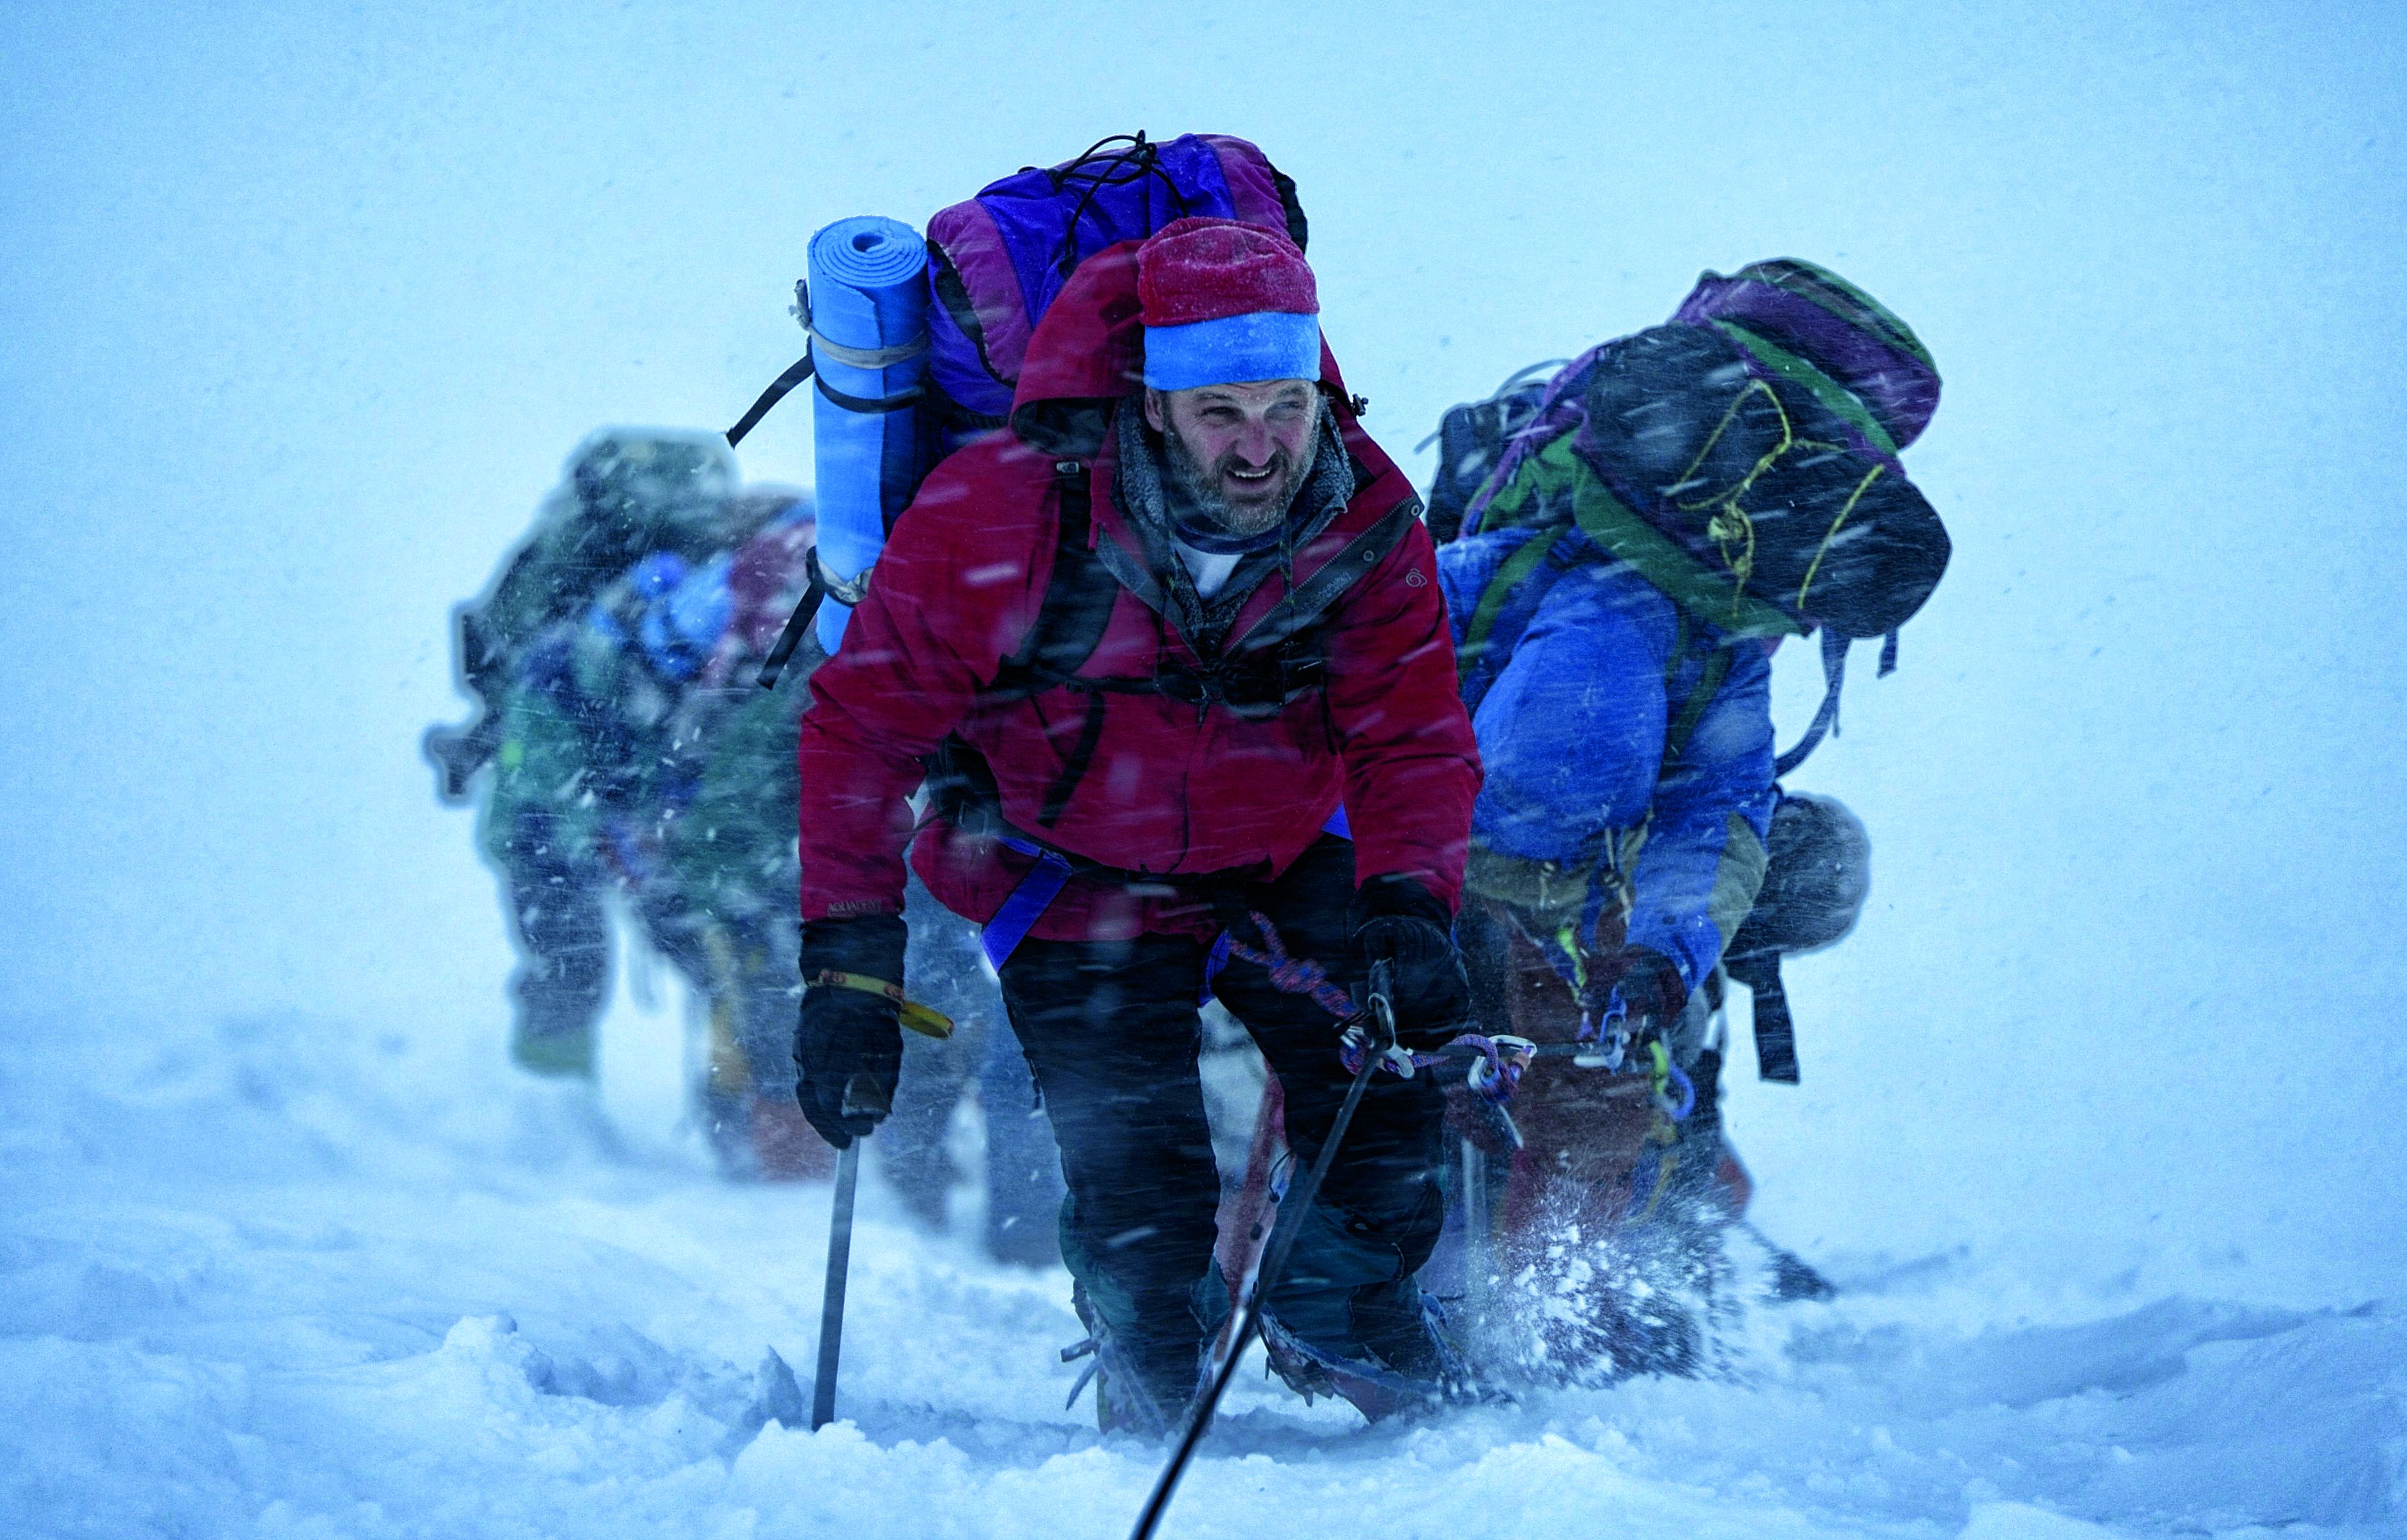  Jason Clarke in 2015 mountaineering drama Everest